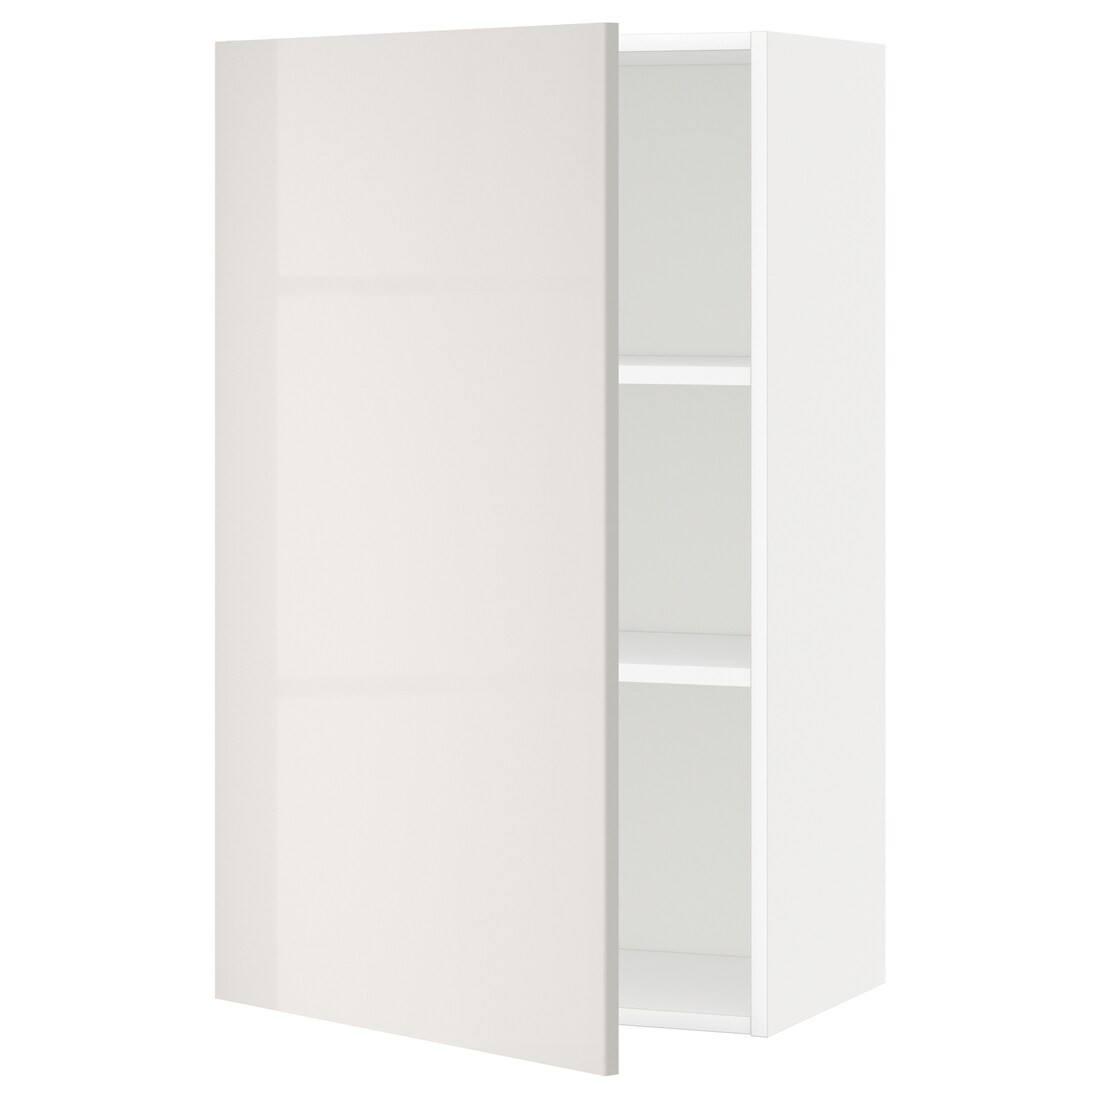 IKEA METOD МЕТОД Шкаф навесной с полками, белый / Ringhult светло-серый, 60x100 см 99456374 994.563.74